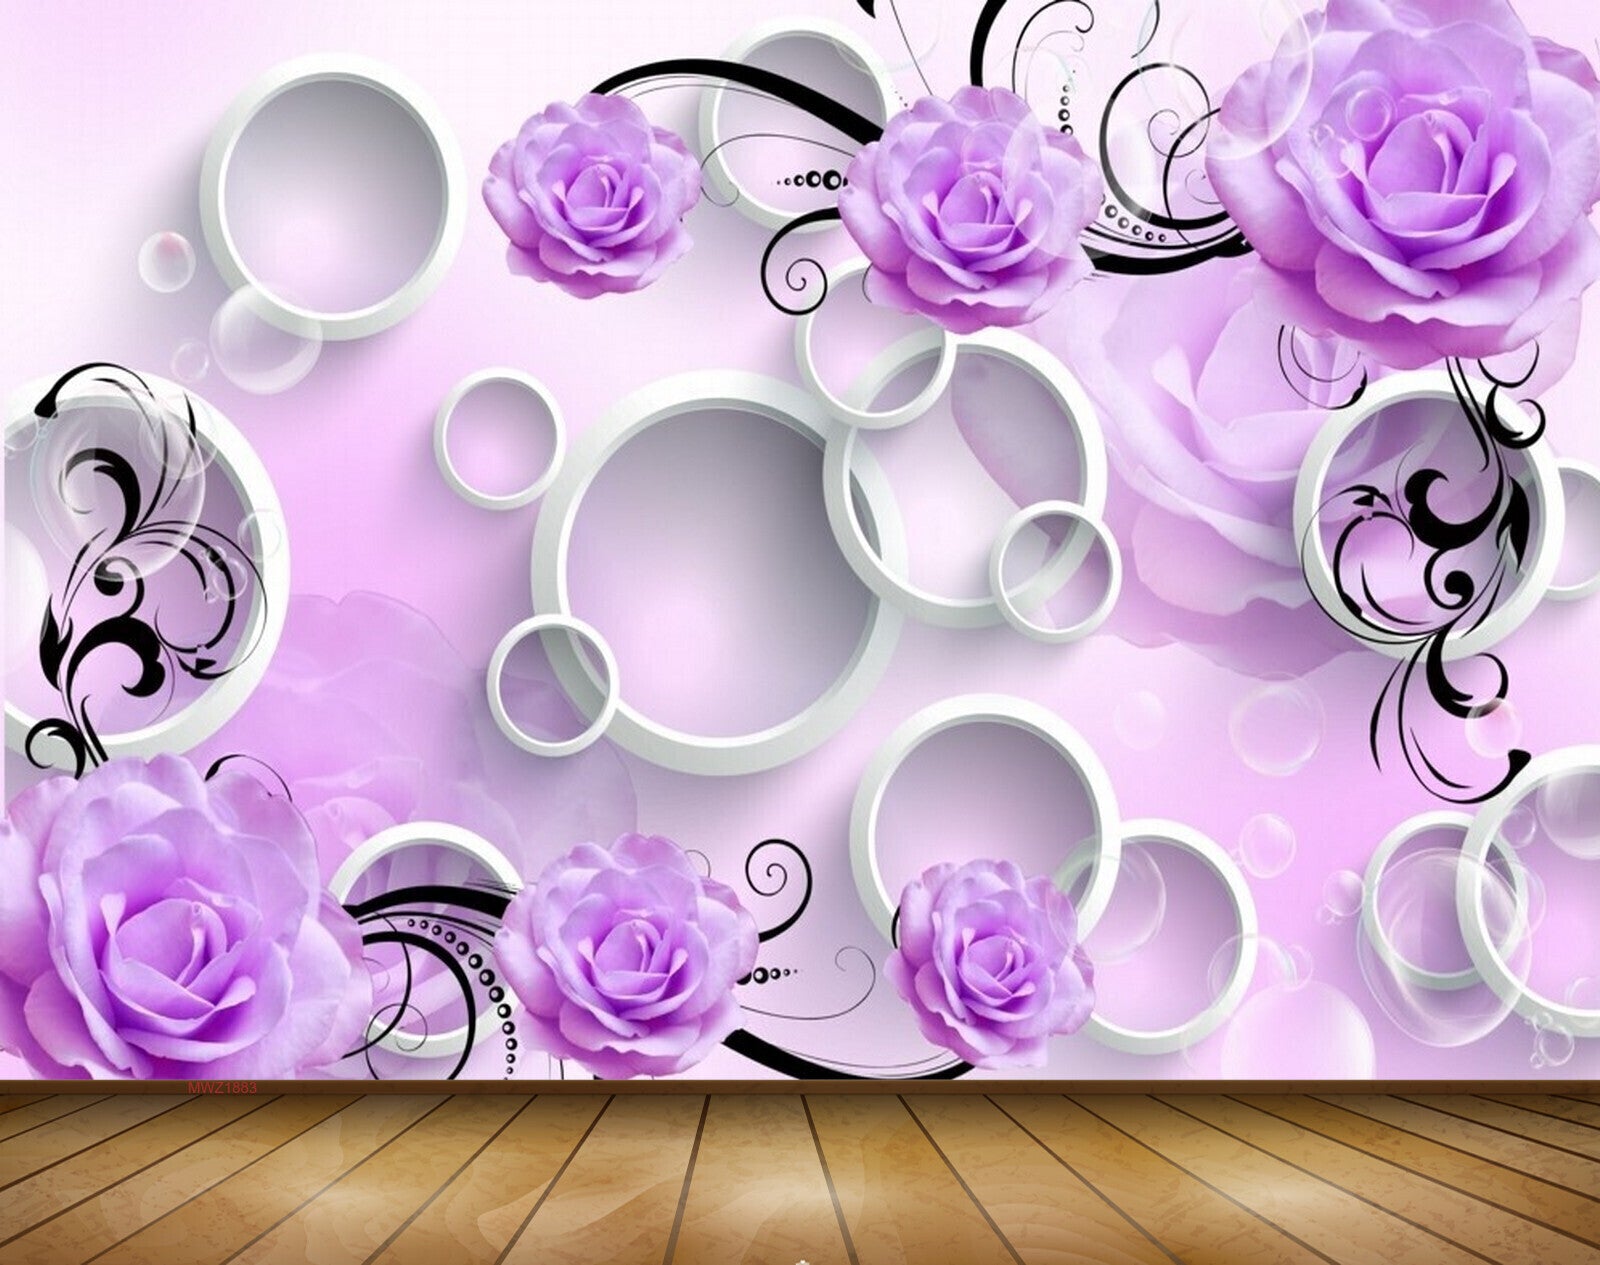 Premium Vector  Spring background of various flowers in purple colors